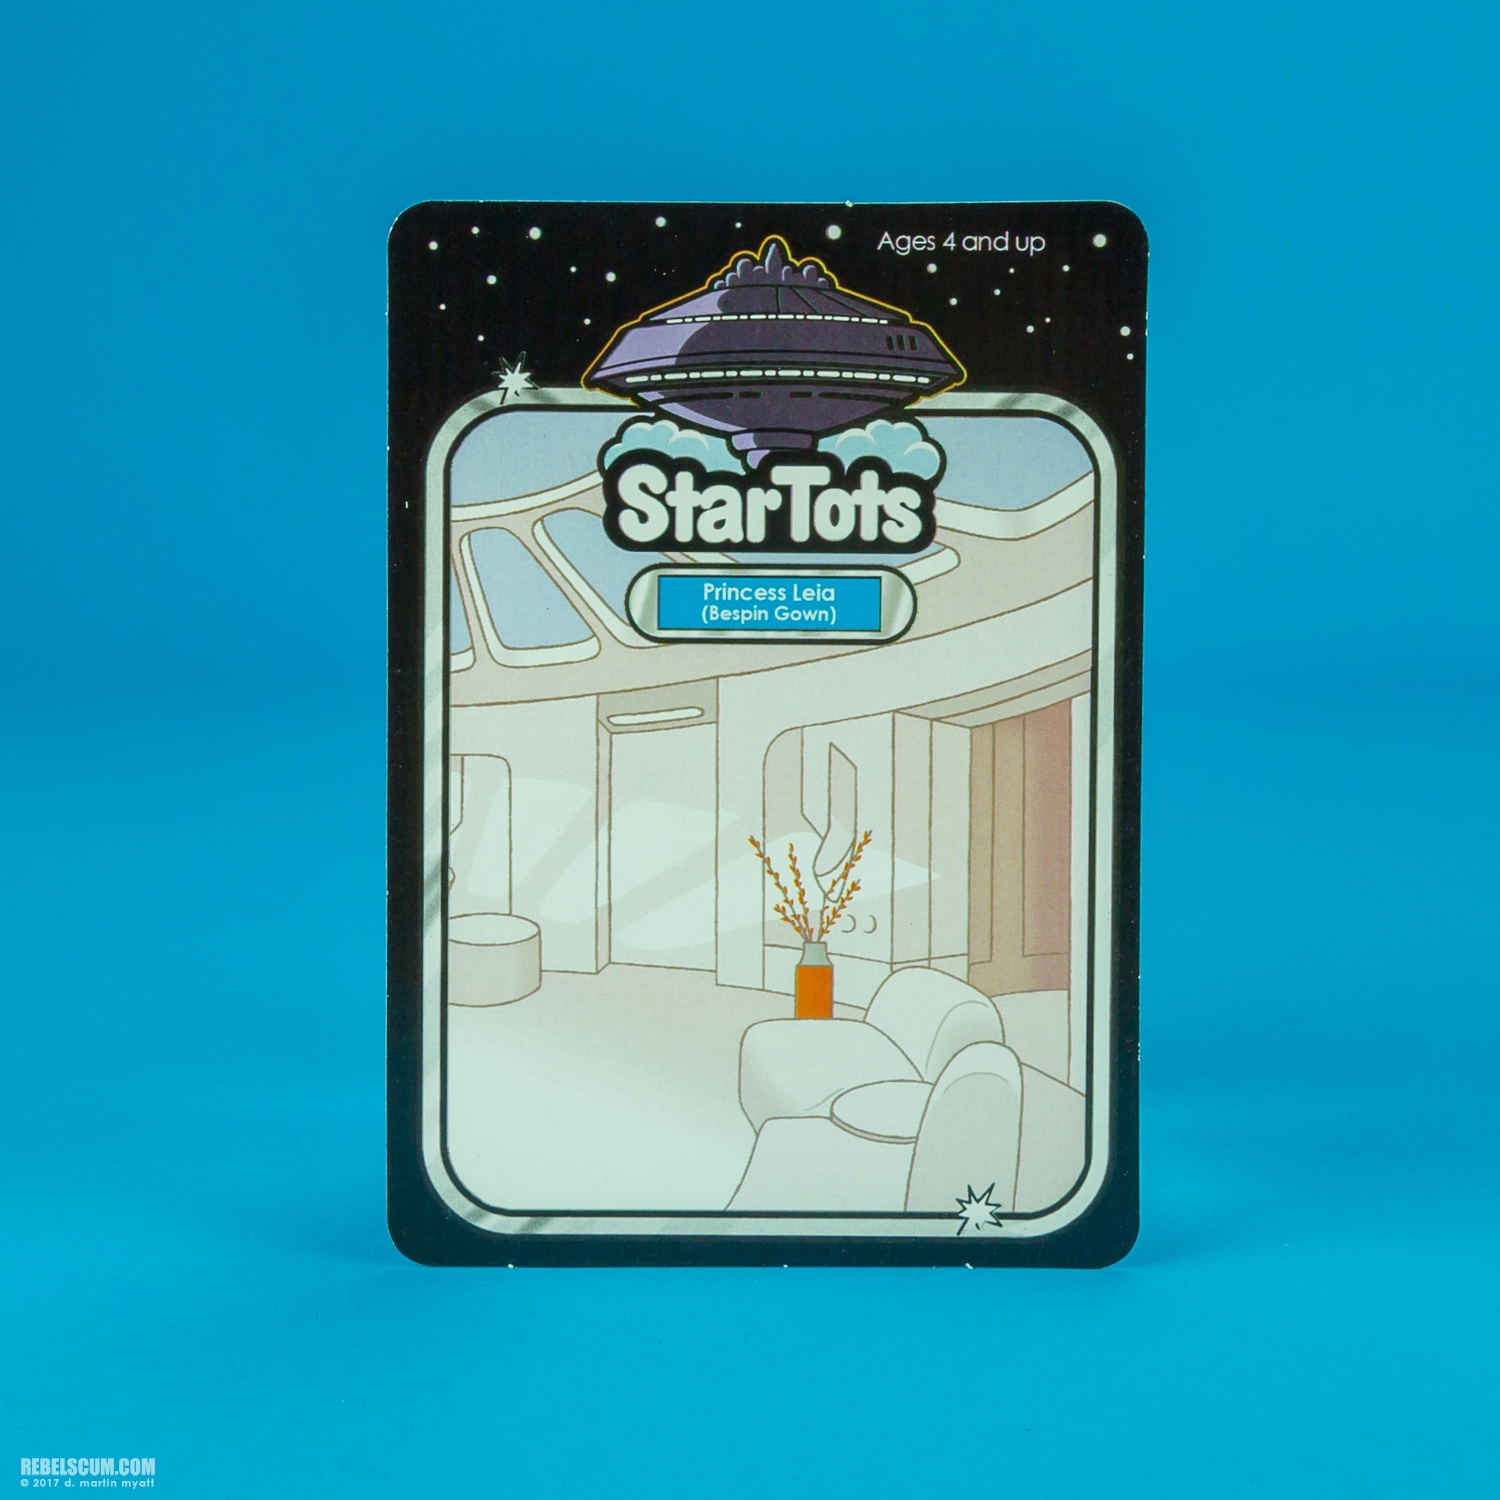 Star-Tots-2015-Star-Wars-Celebration-Anaheim-083.jpg